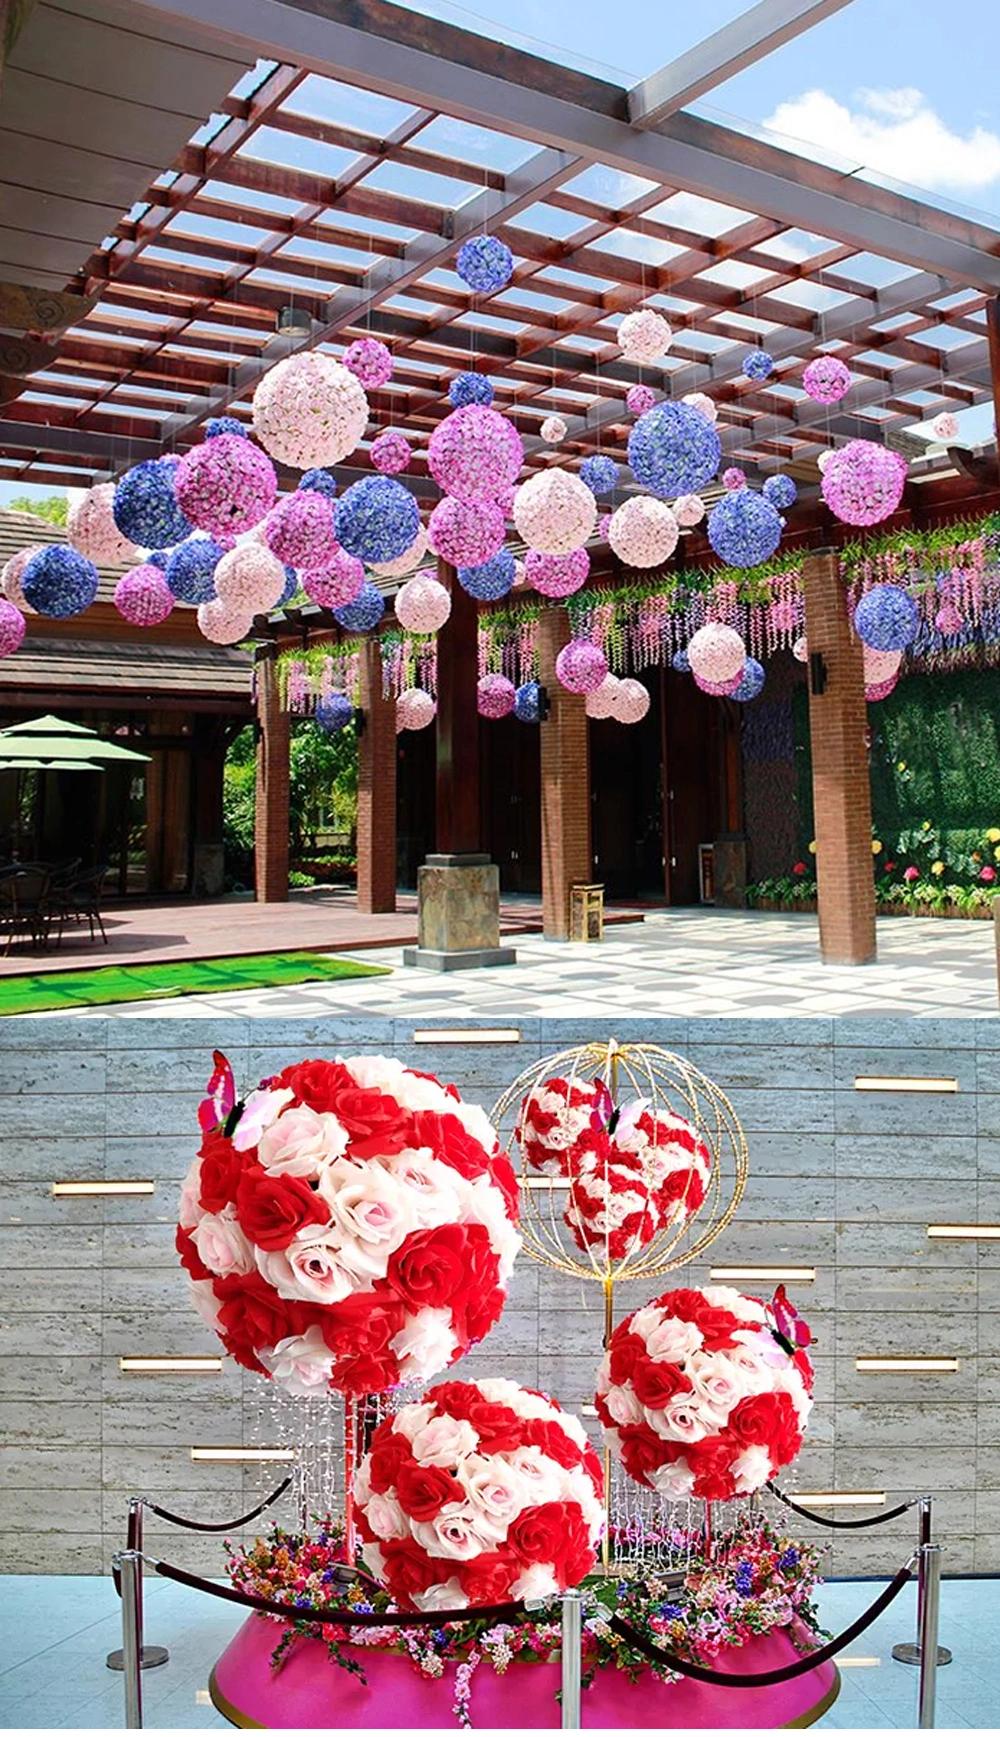 Flower Balls Paper Decoration Paper Flower Balls Tissue Paper POM Poms for Birthday/Wedding/Party Decorations